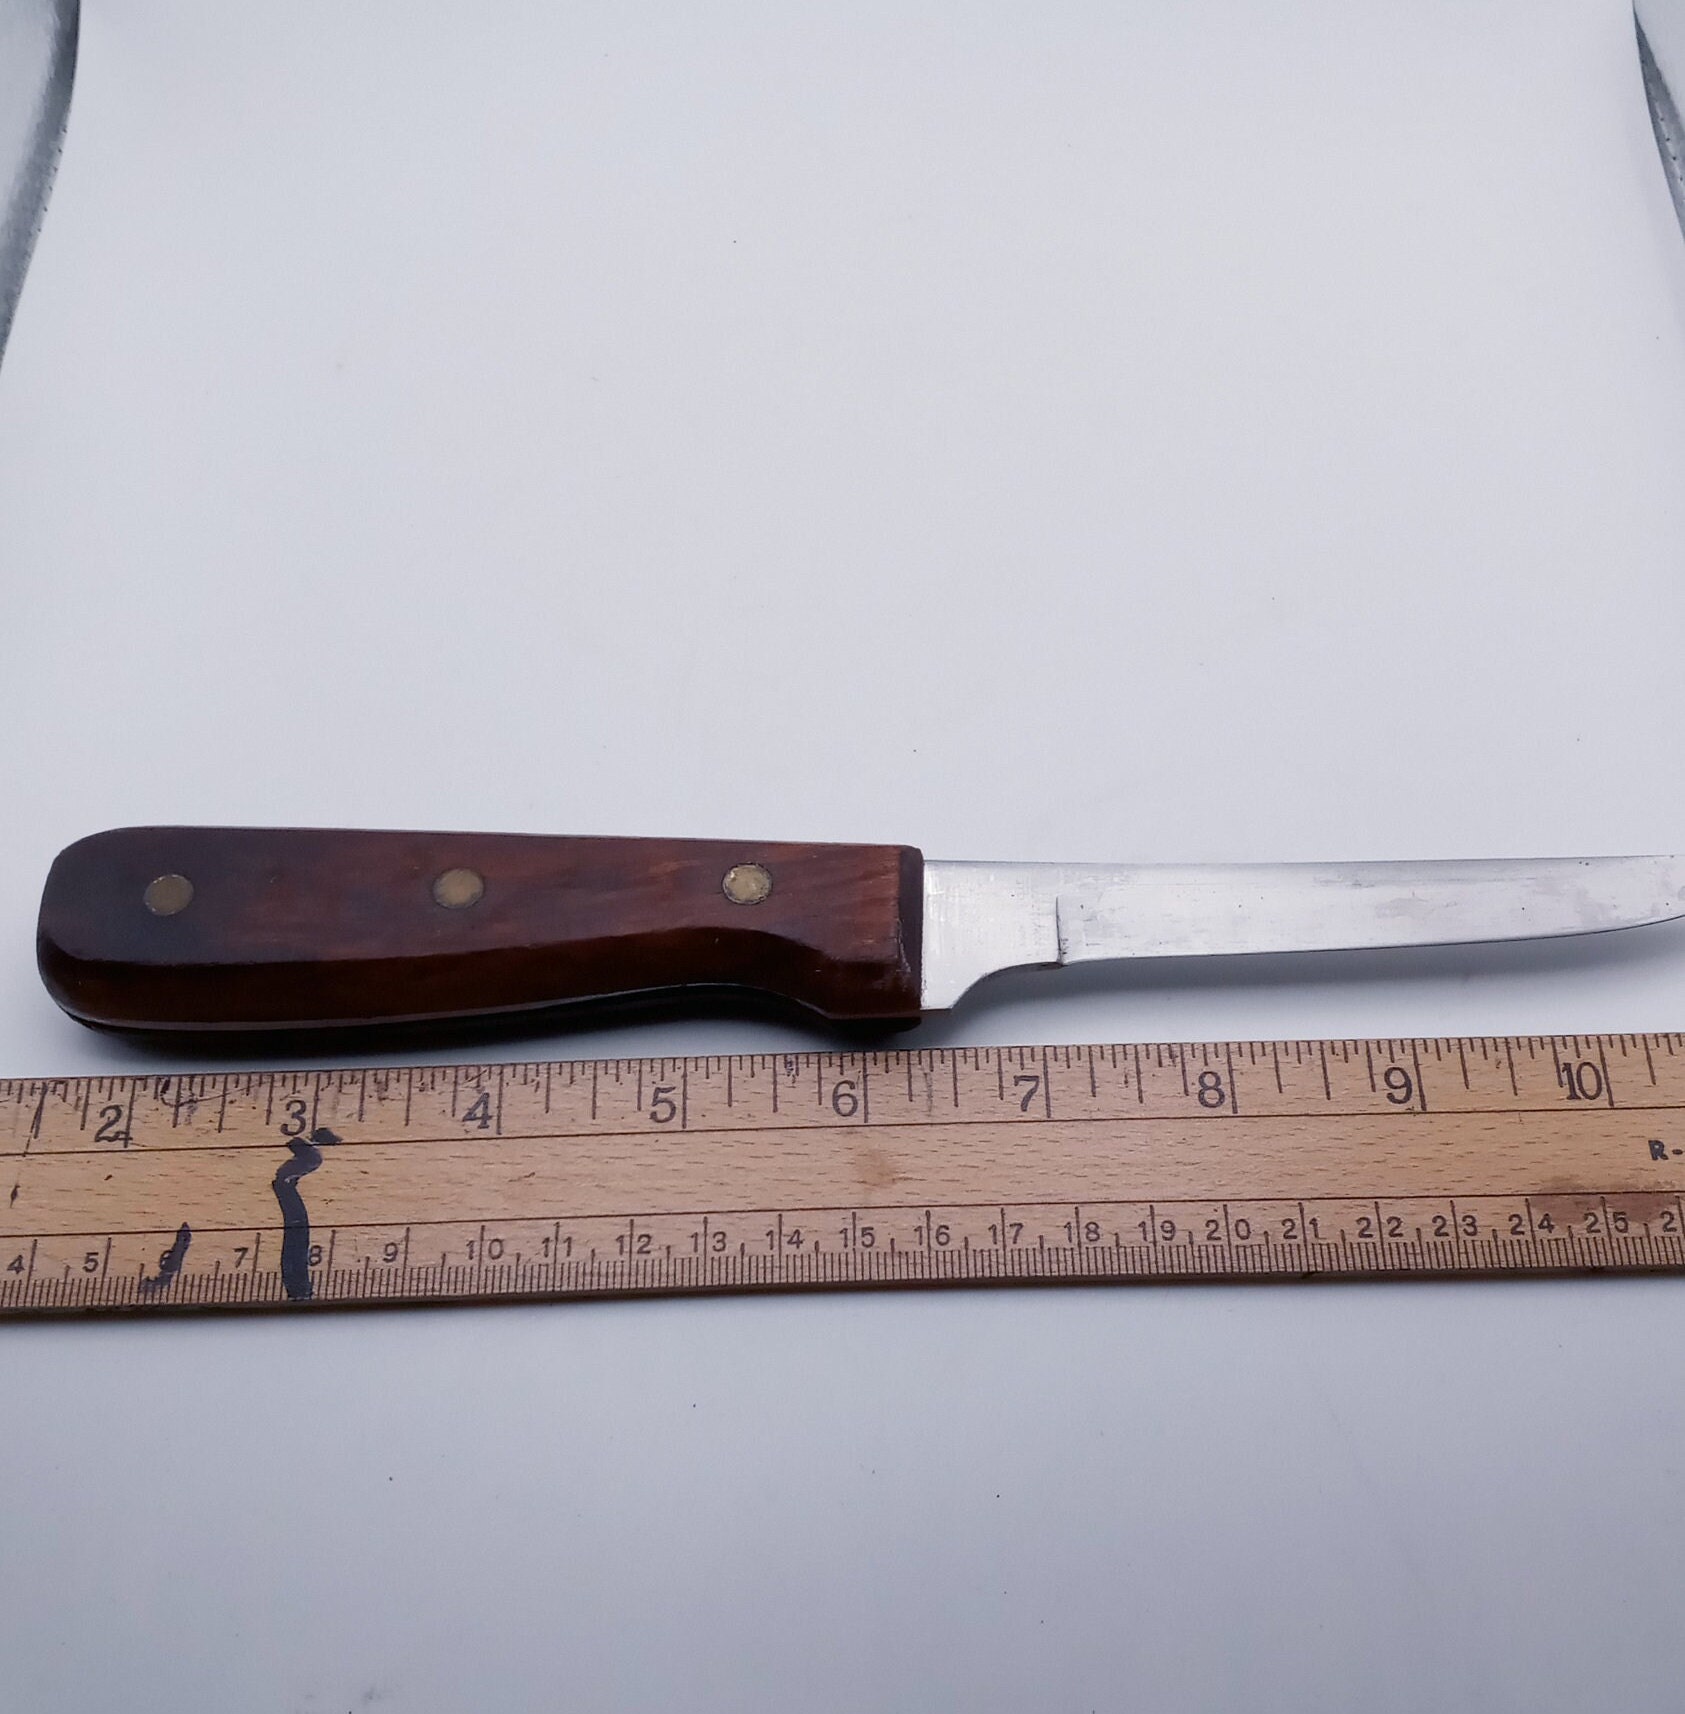 Vintage Berkley Outdoorsman metal knife with plastic sheath fillet